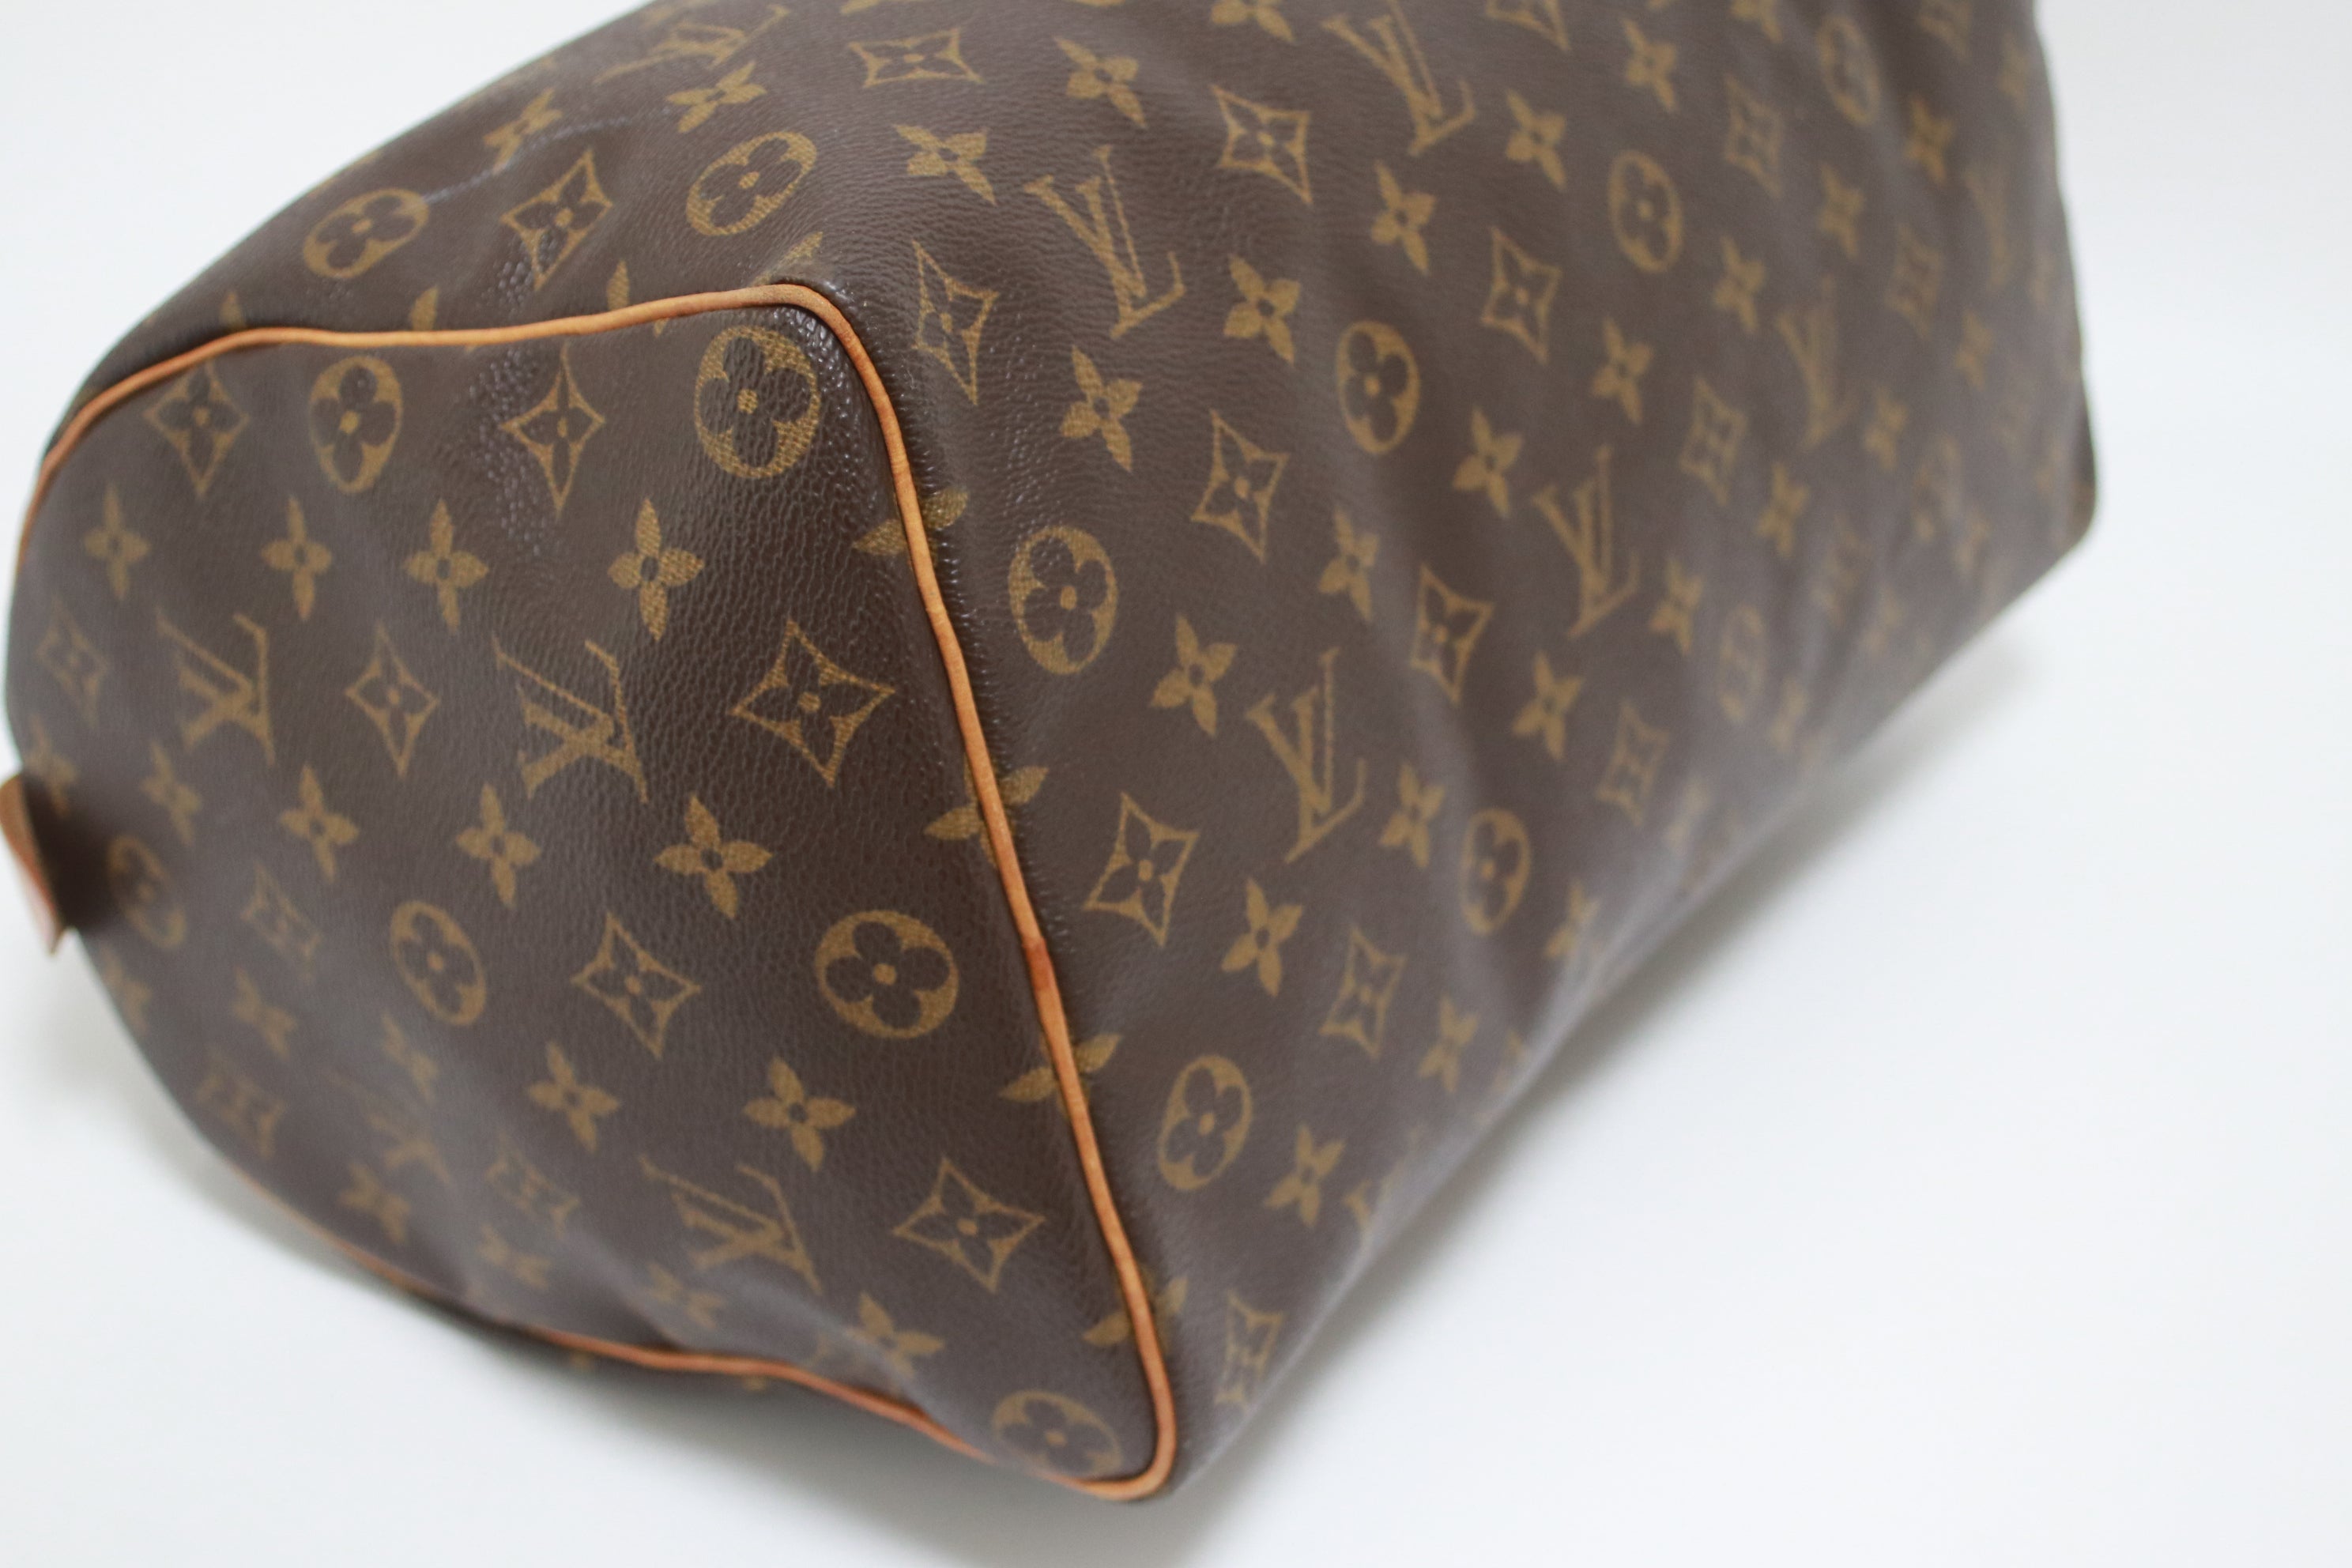 Louis Vuitton Speedy 35 Handbag Used (6568)